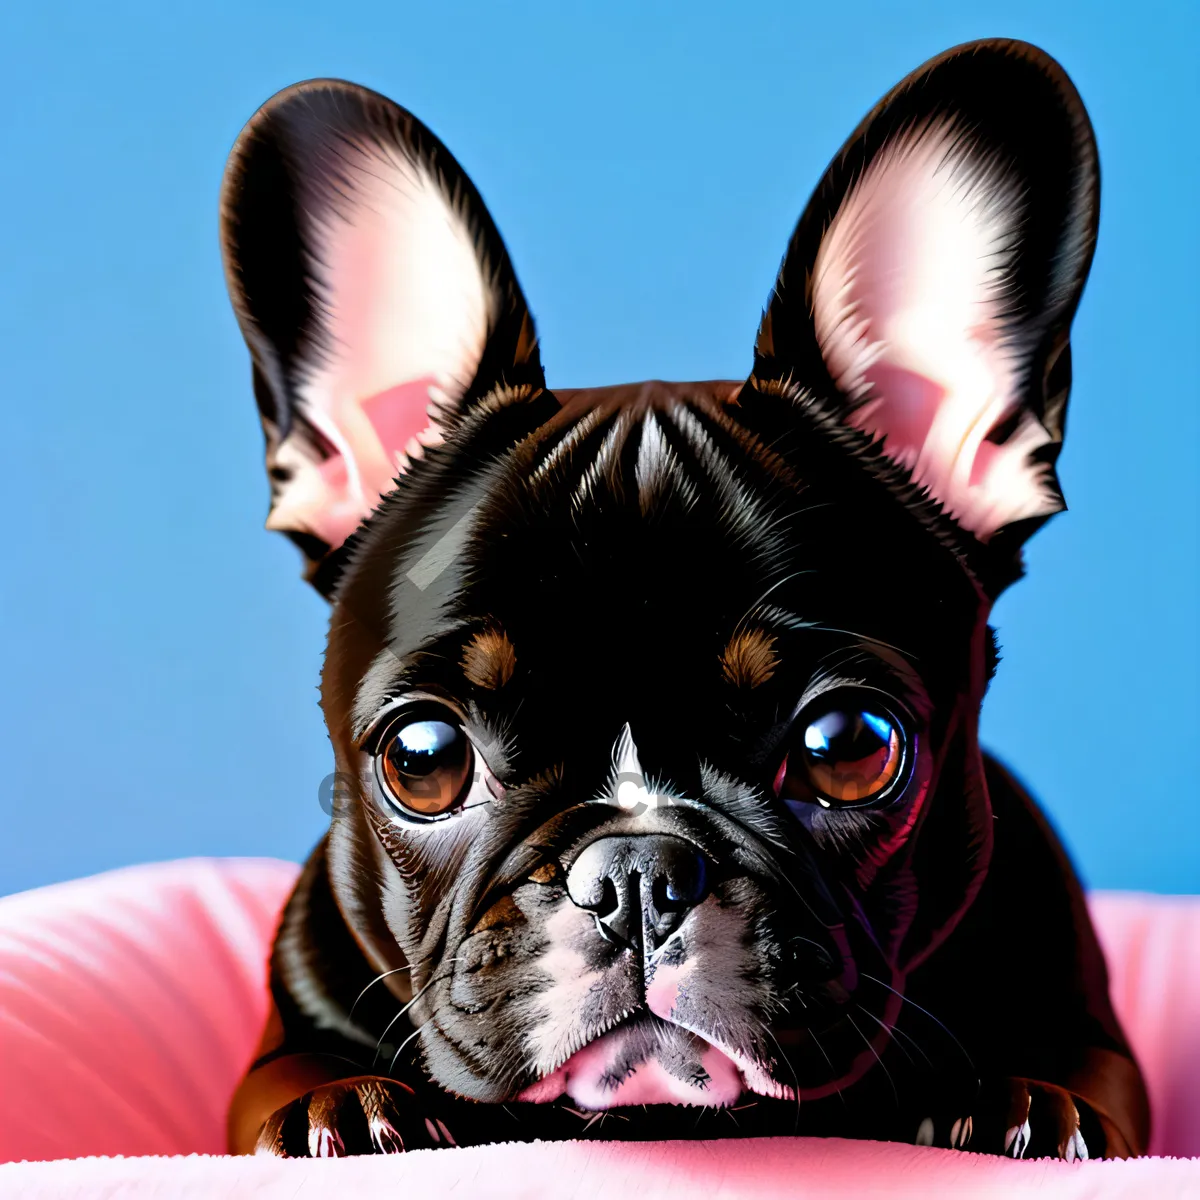 Picture of Adorable Bull Terrier Puppy - Purebred Canine Studio Portrait